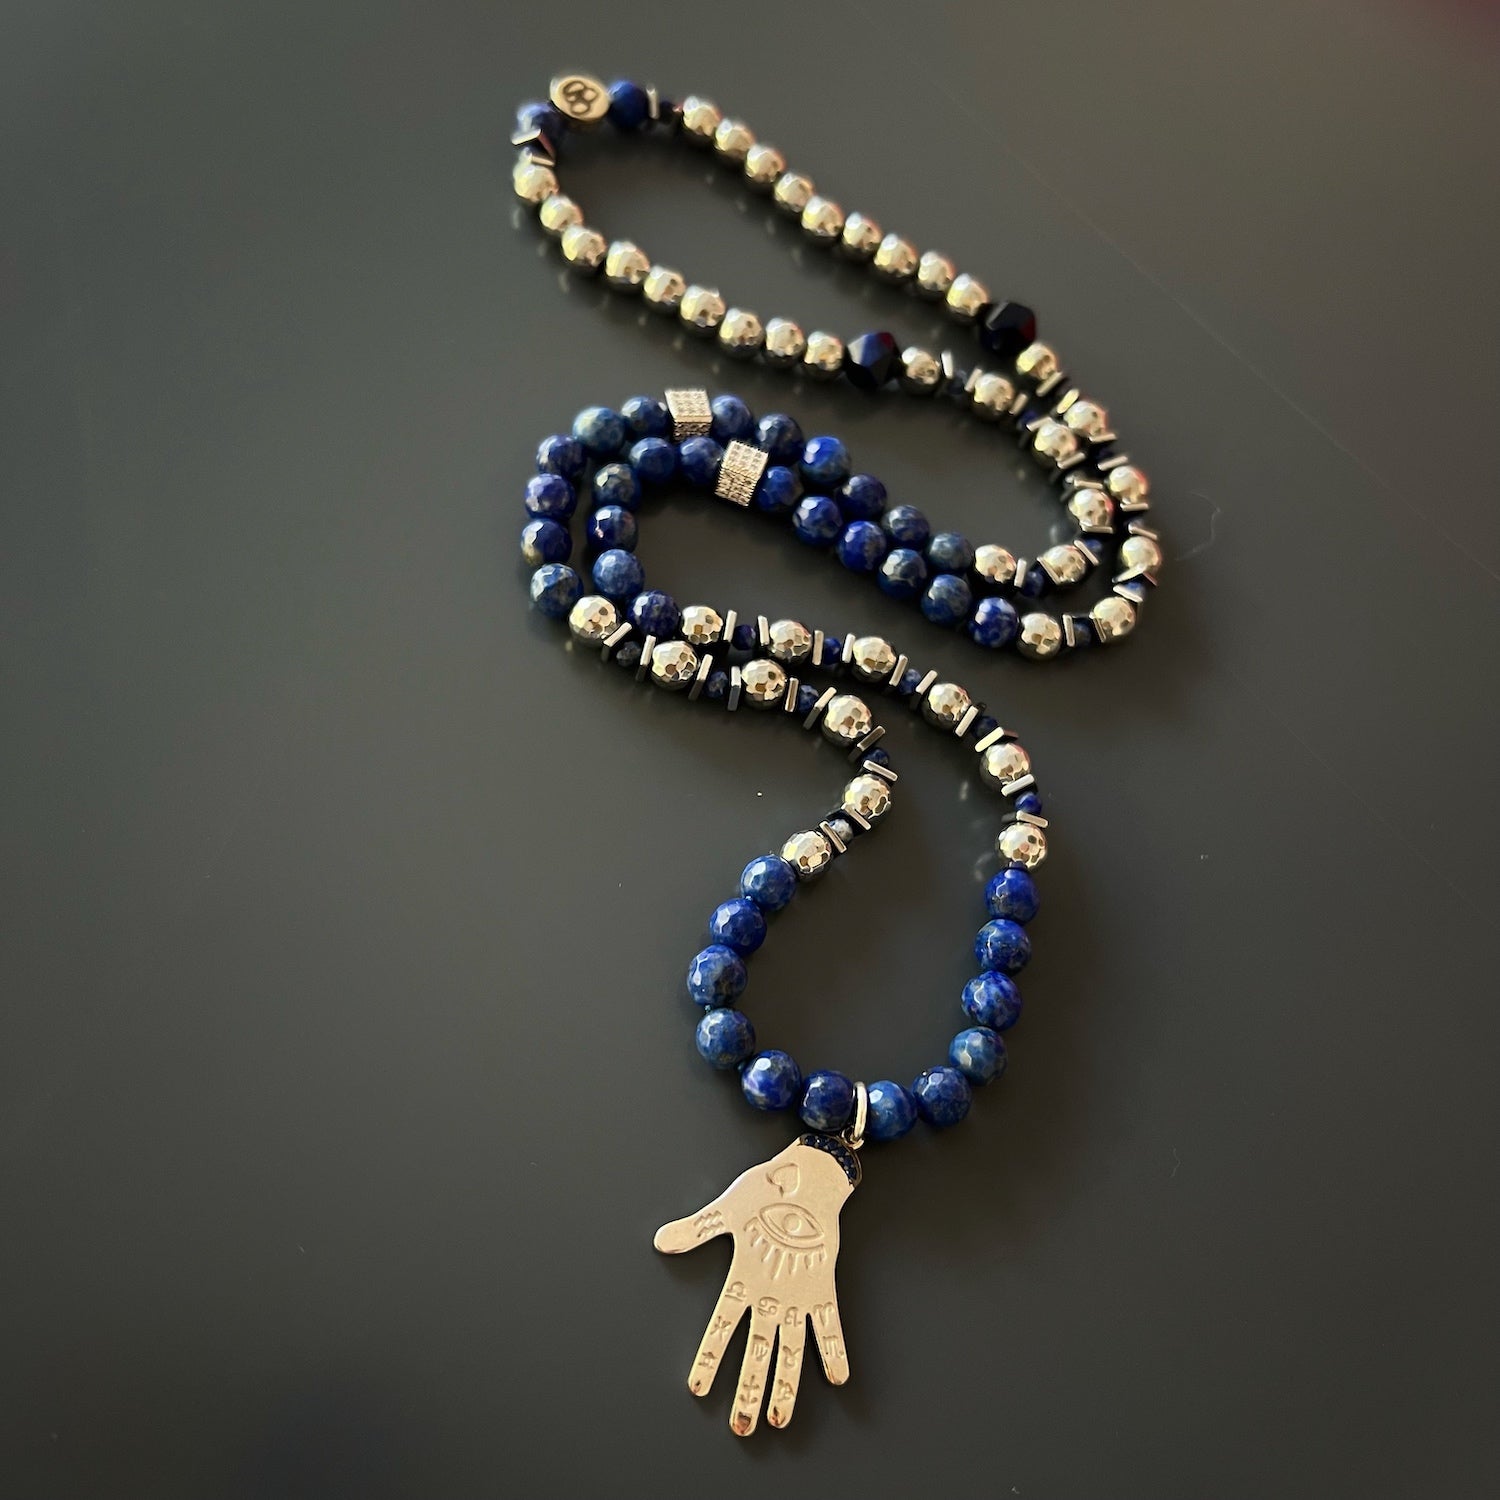 Hamsa Hand Pendant with Lapis Lazuli - Embrace the spiritual symbolism of this unique necklace.